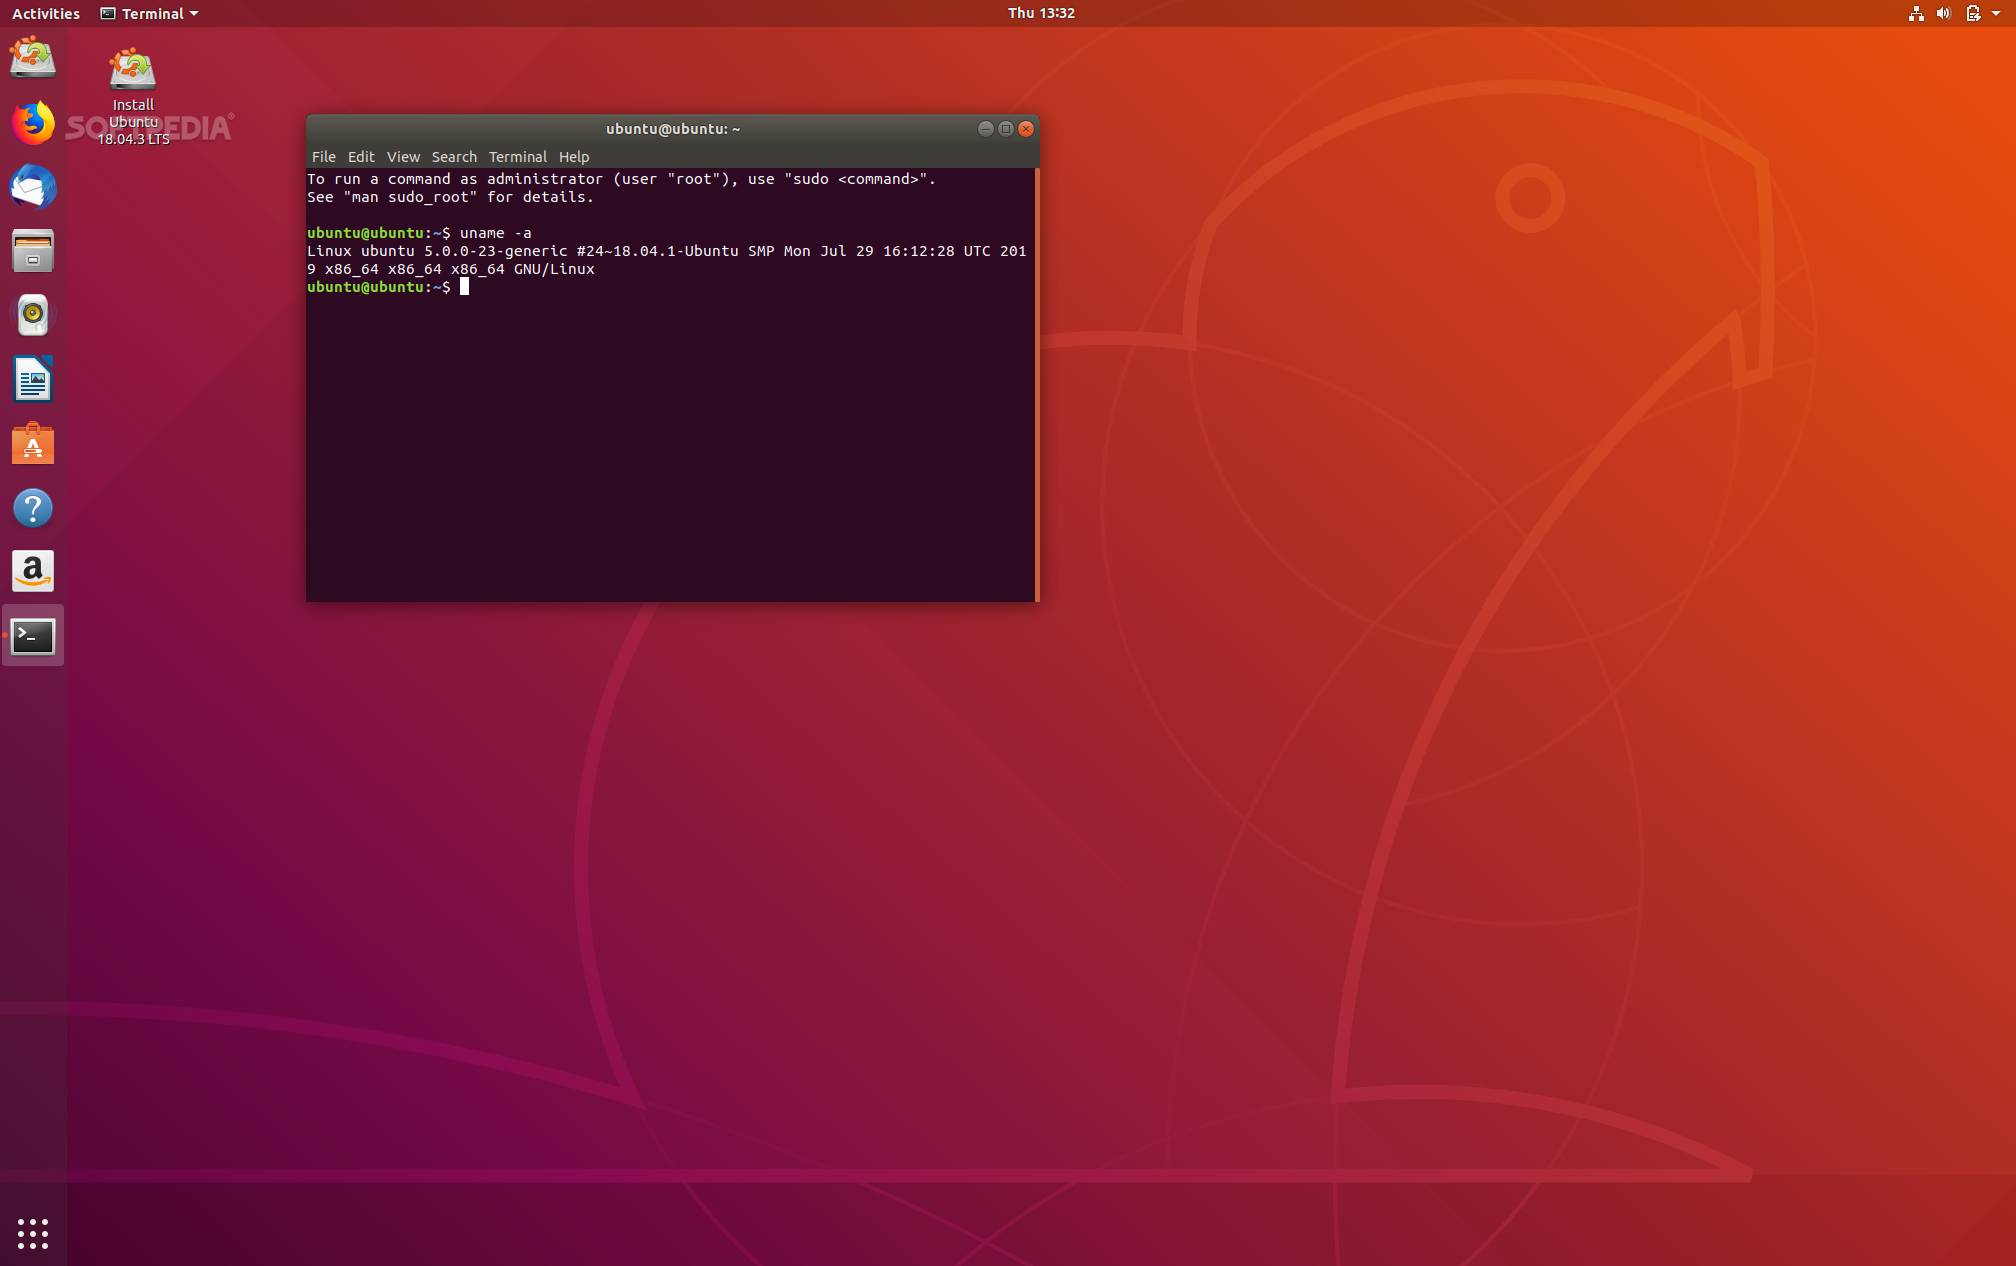 Lançado Ubuntu 18.04.3 LTS com Kernel 5.0